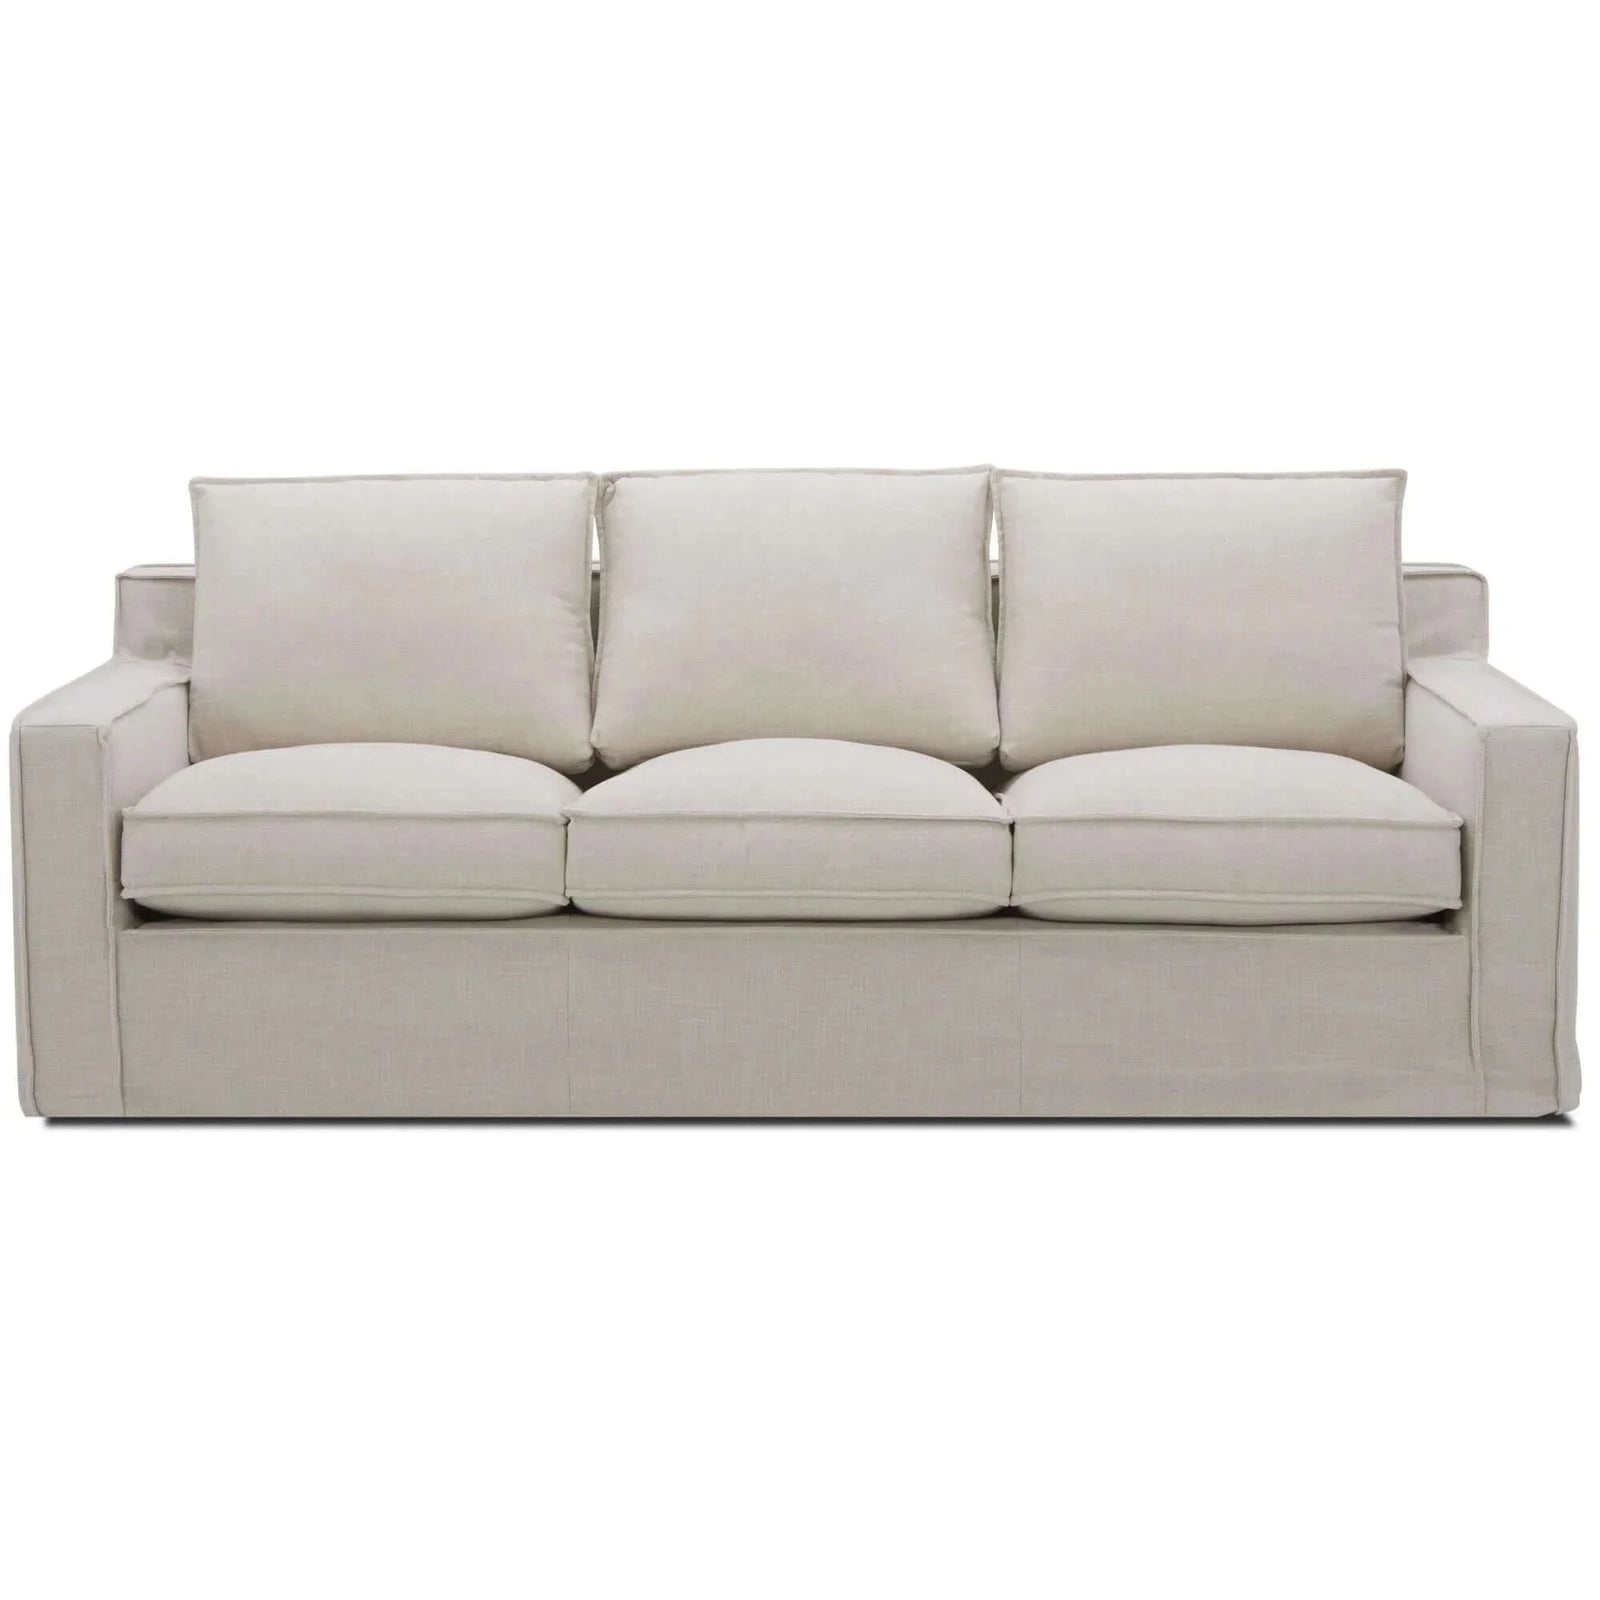 Buy plushy 3 seater sofa fabric uplholstered lounge couch - stone - upinteriors-Upinteriors